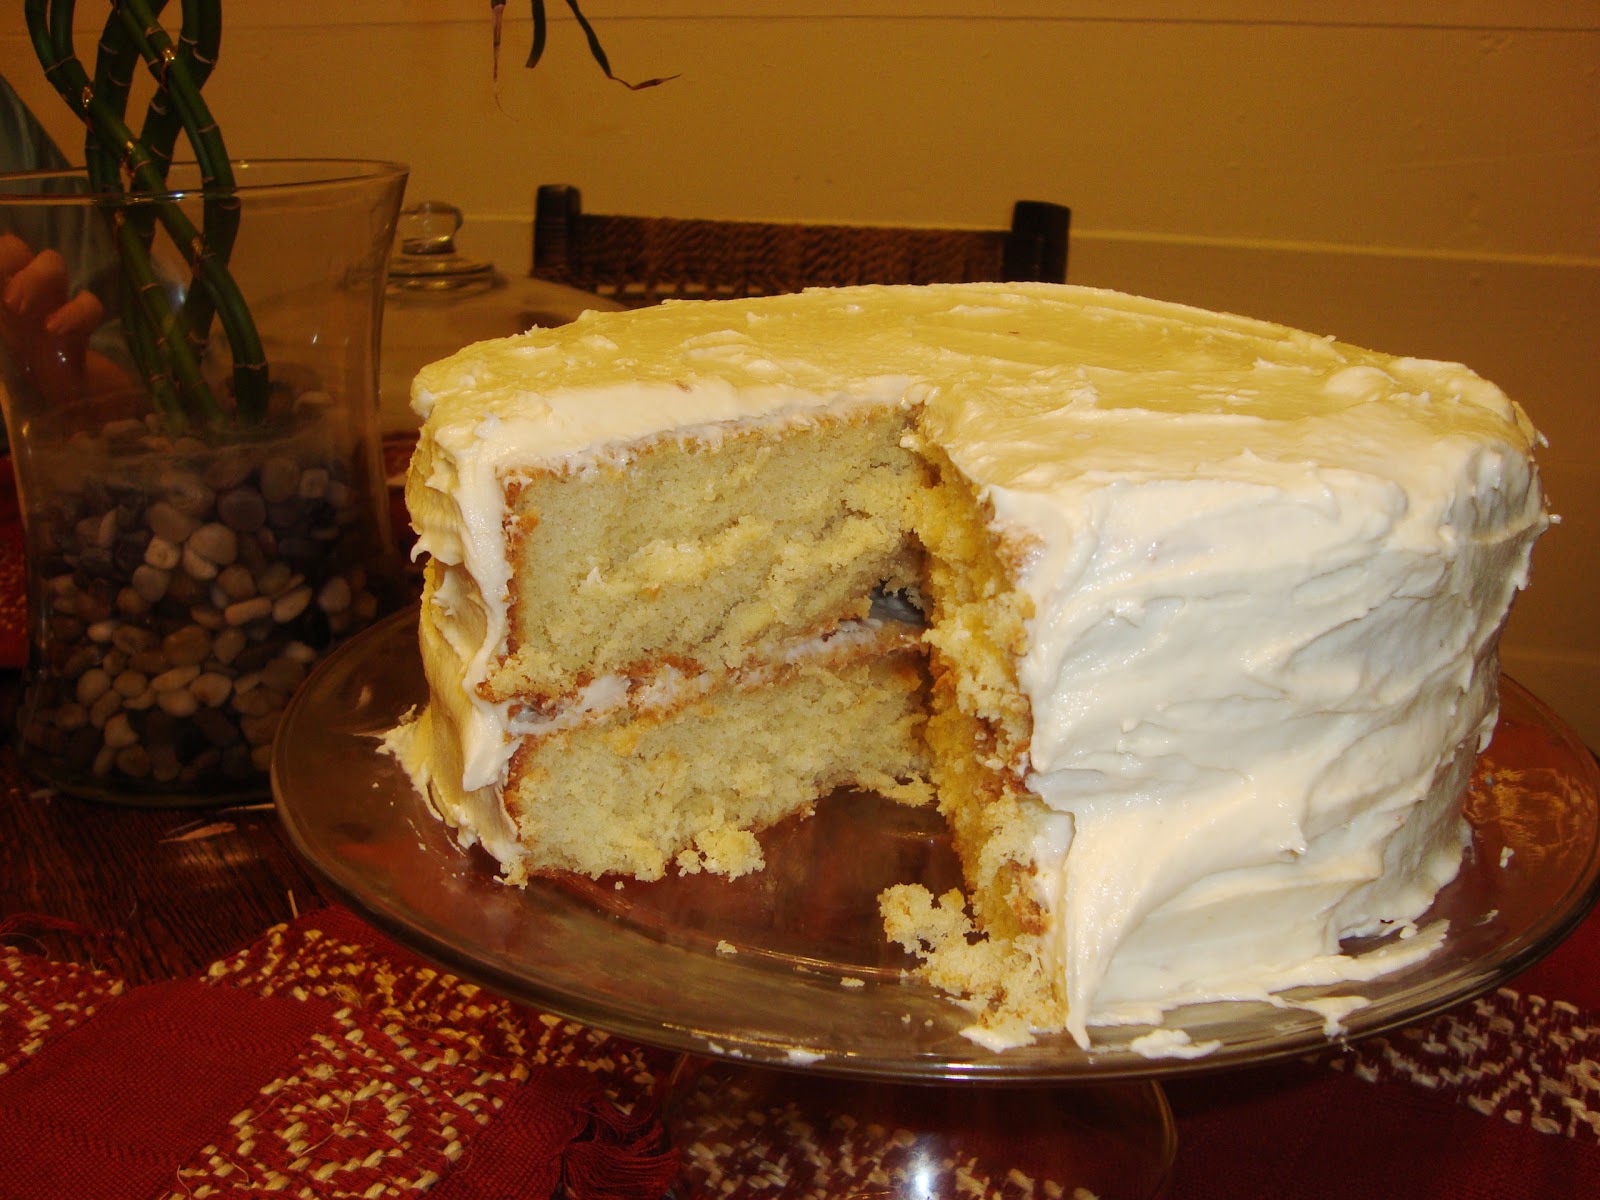 http://4.bp.blogspot.com/_ZjOAGWCN1fw/TNIEVve8bmI/AAAAAAAAAeQ/0zevzxr9kmM/s1600/White+Chocolate+Peach+Cake+edited.jpg